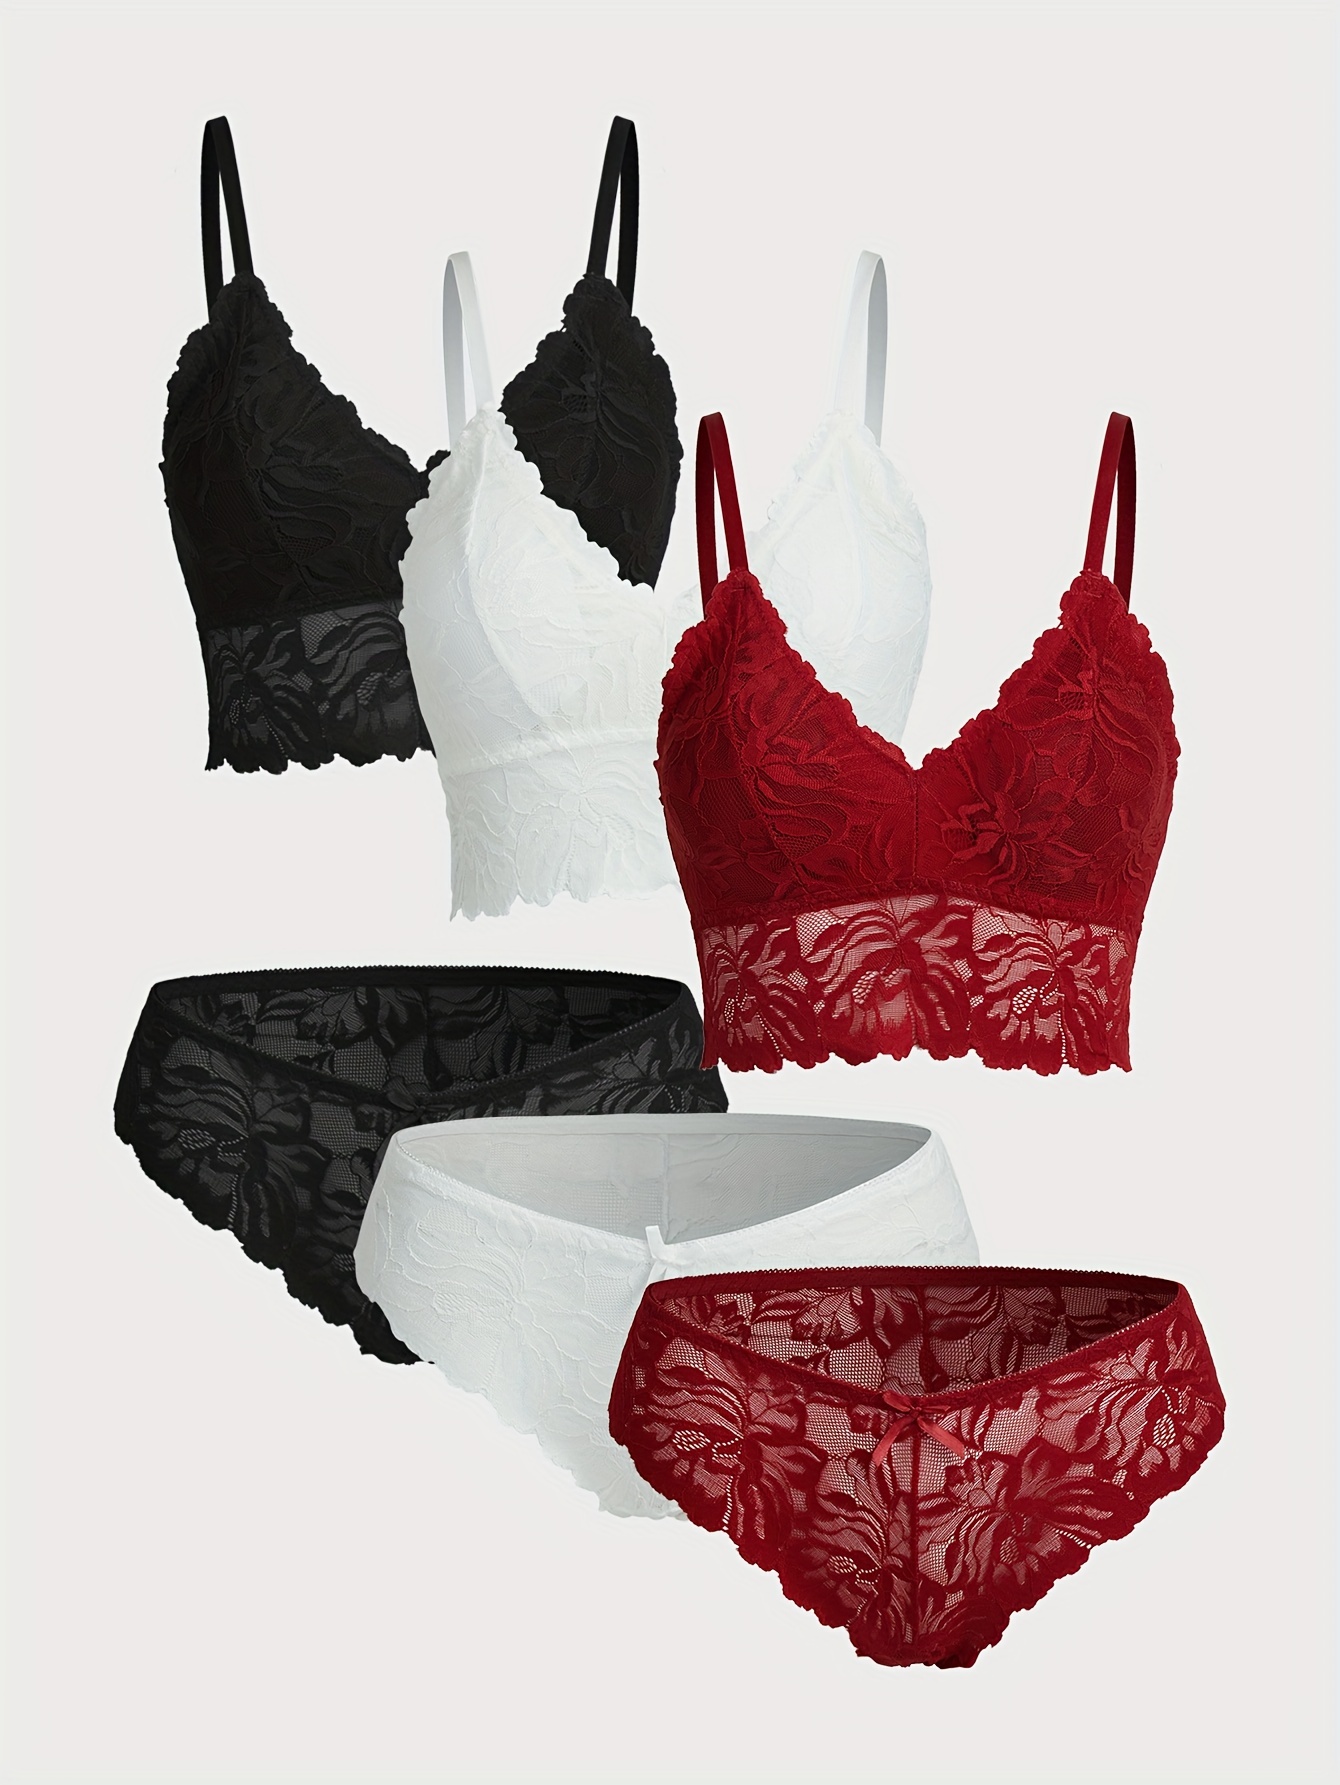 Contrast Lace Velvet Bra & Panties, Wireless Bra & Elastic Panties Lingerie  Set, Women's Lingerie & Underwear